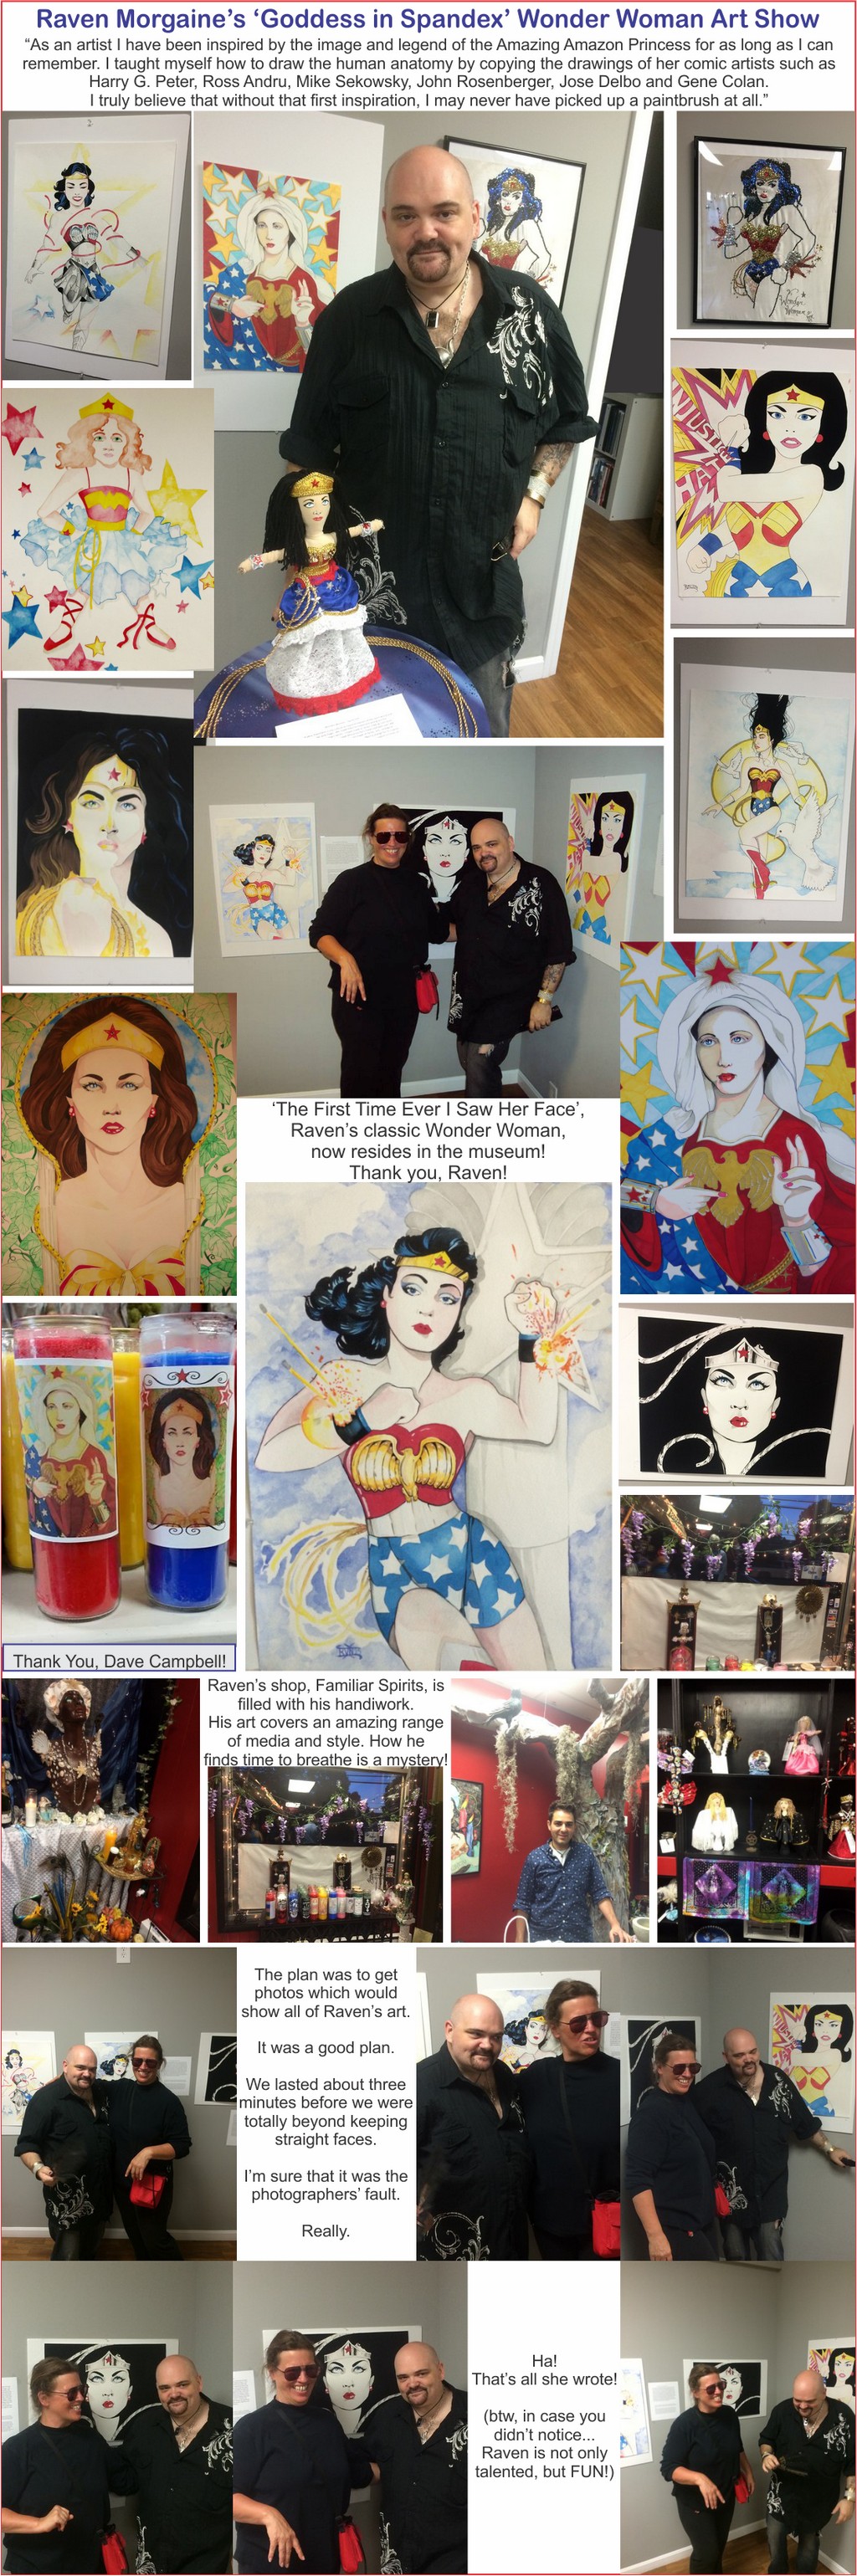 Raven Morgaine Wonder Woman Art Show on Wonder Woman Network